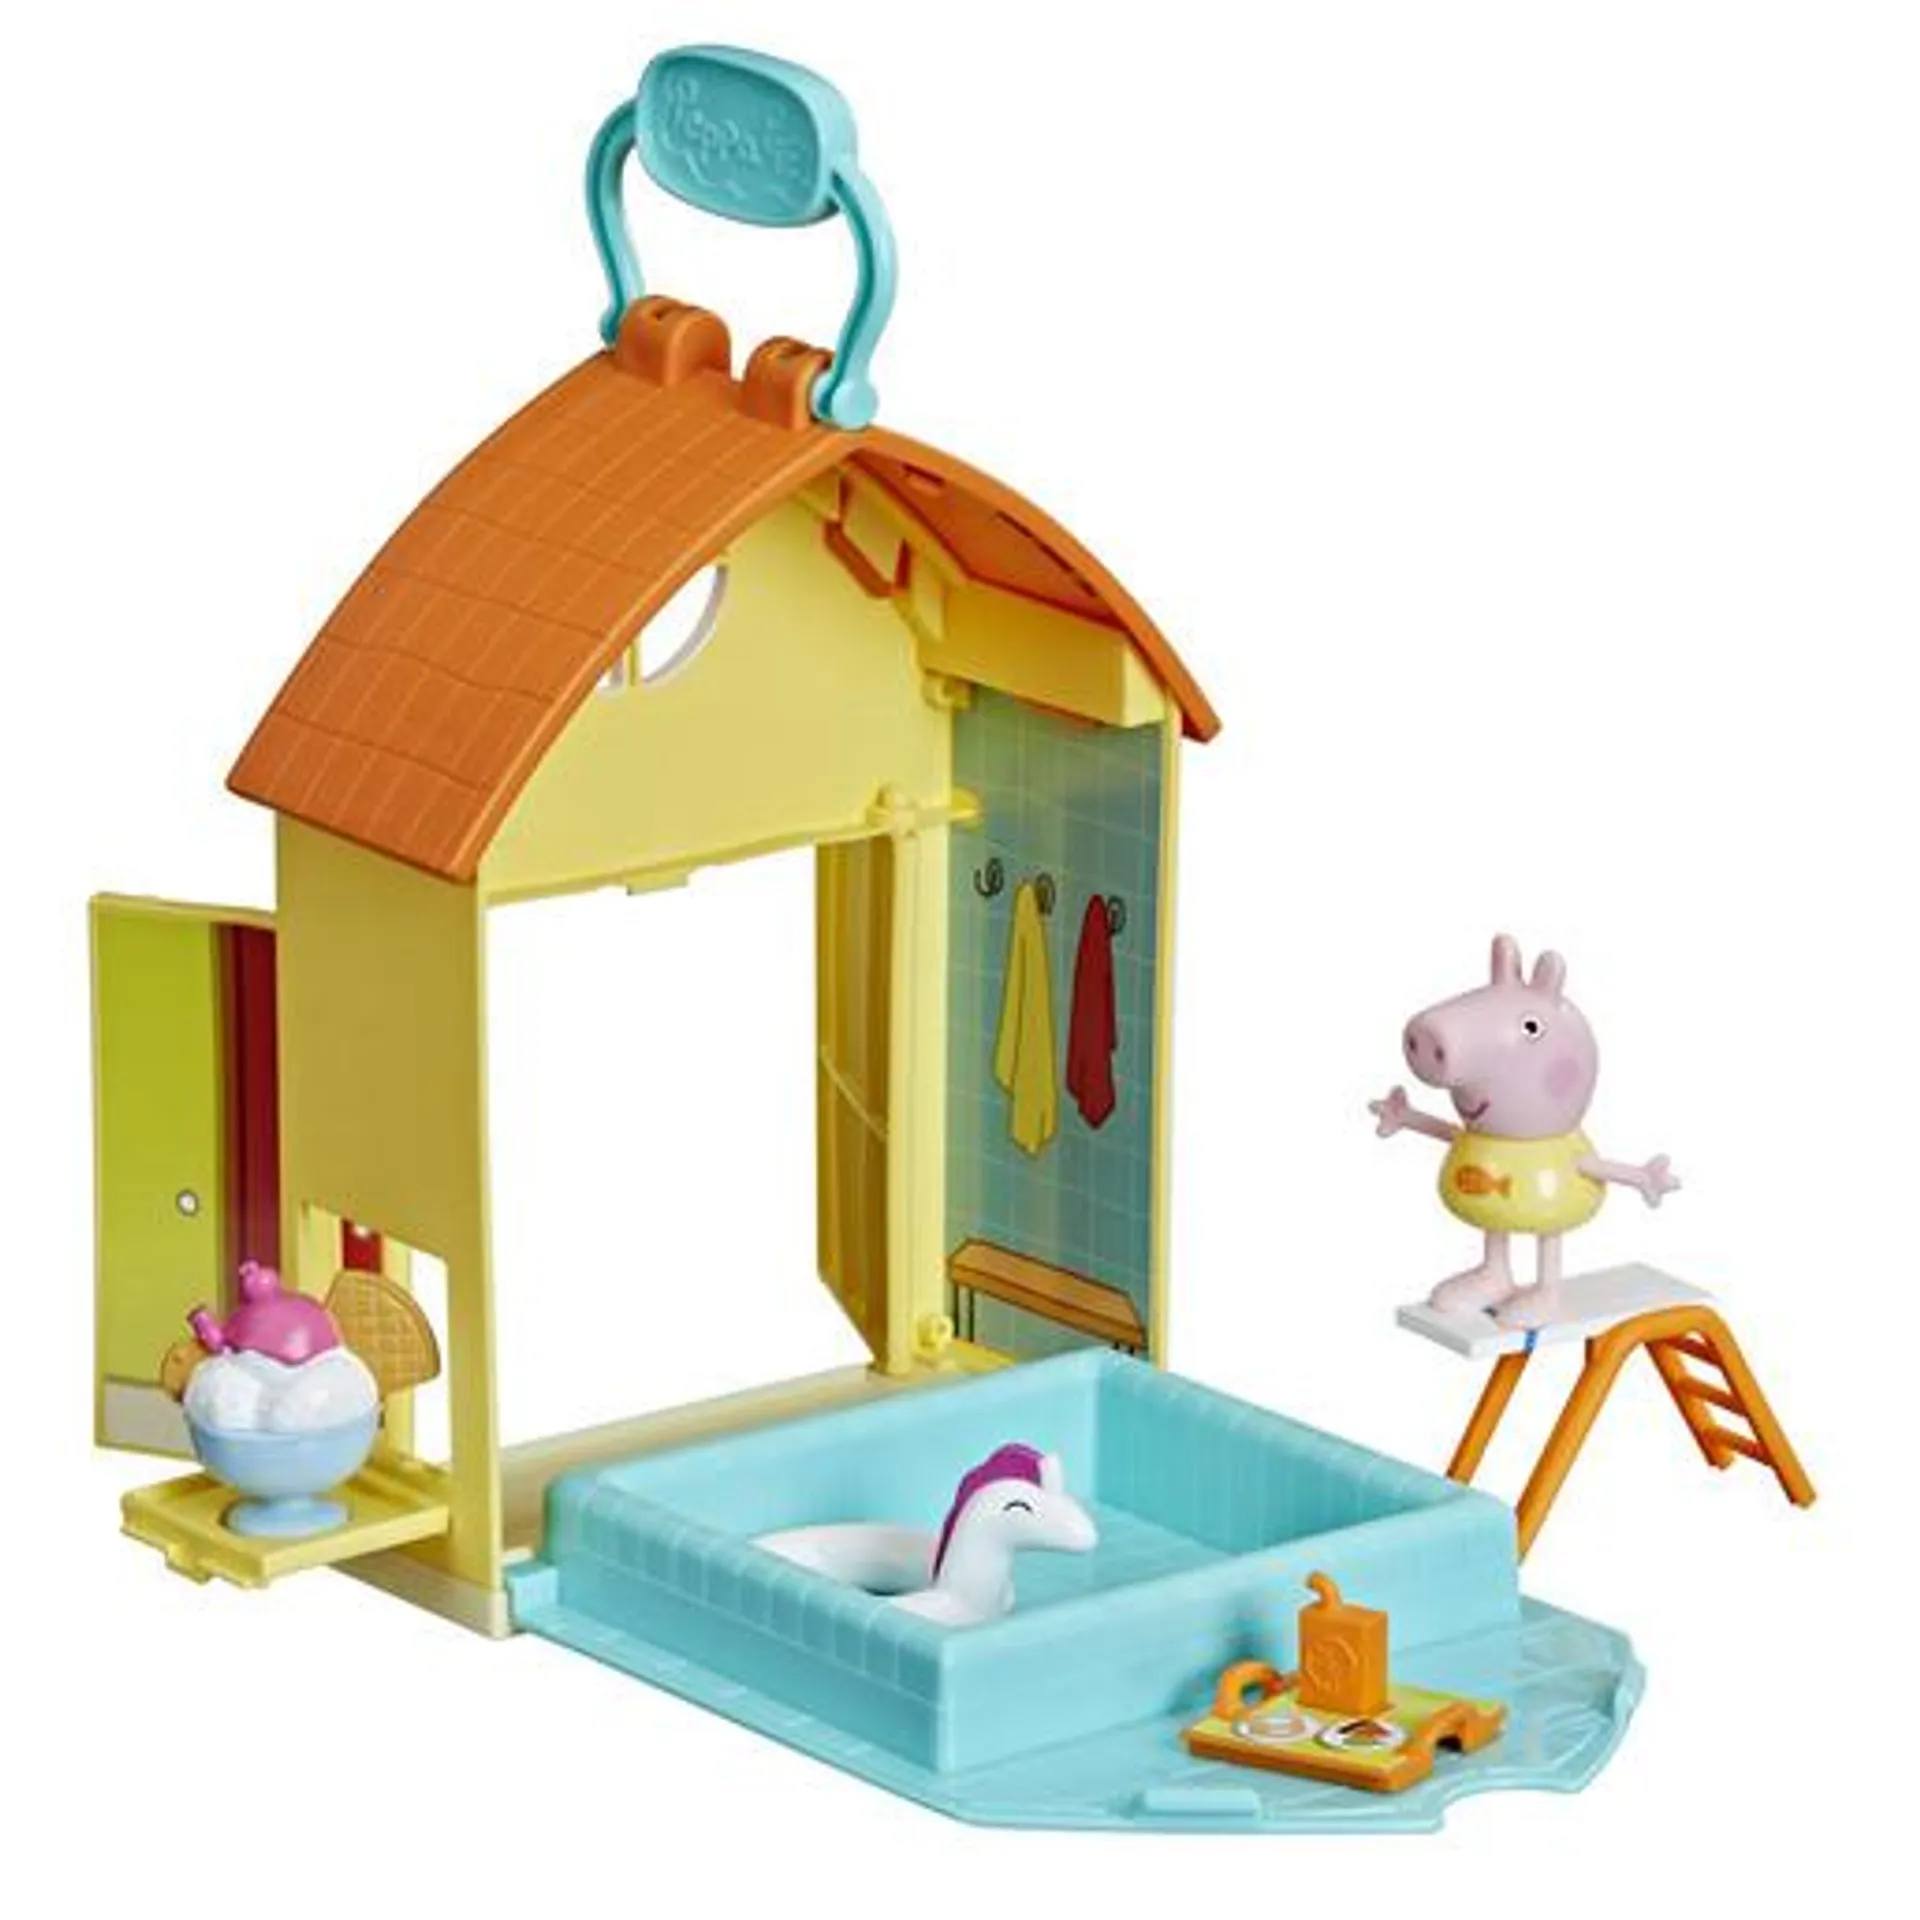 Peppa Pig: Peppa’s Adventures - Peppa’s Swimming Pool Fun Playset